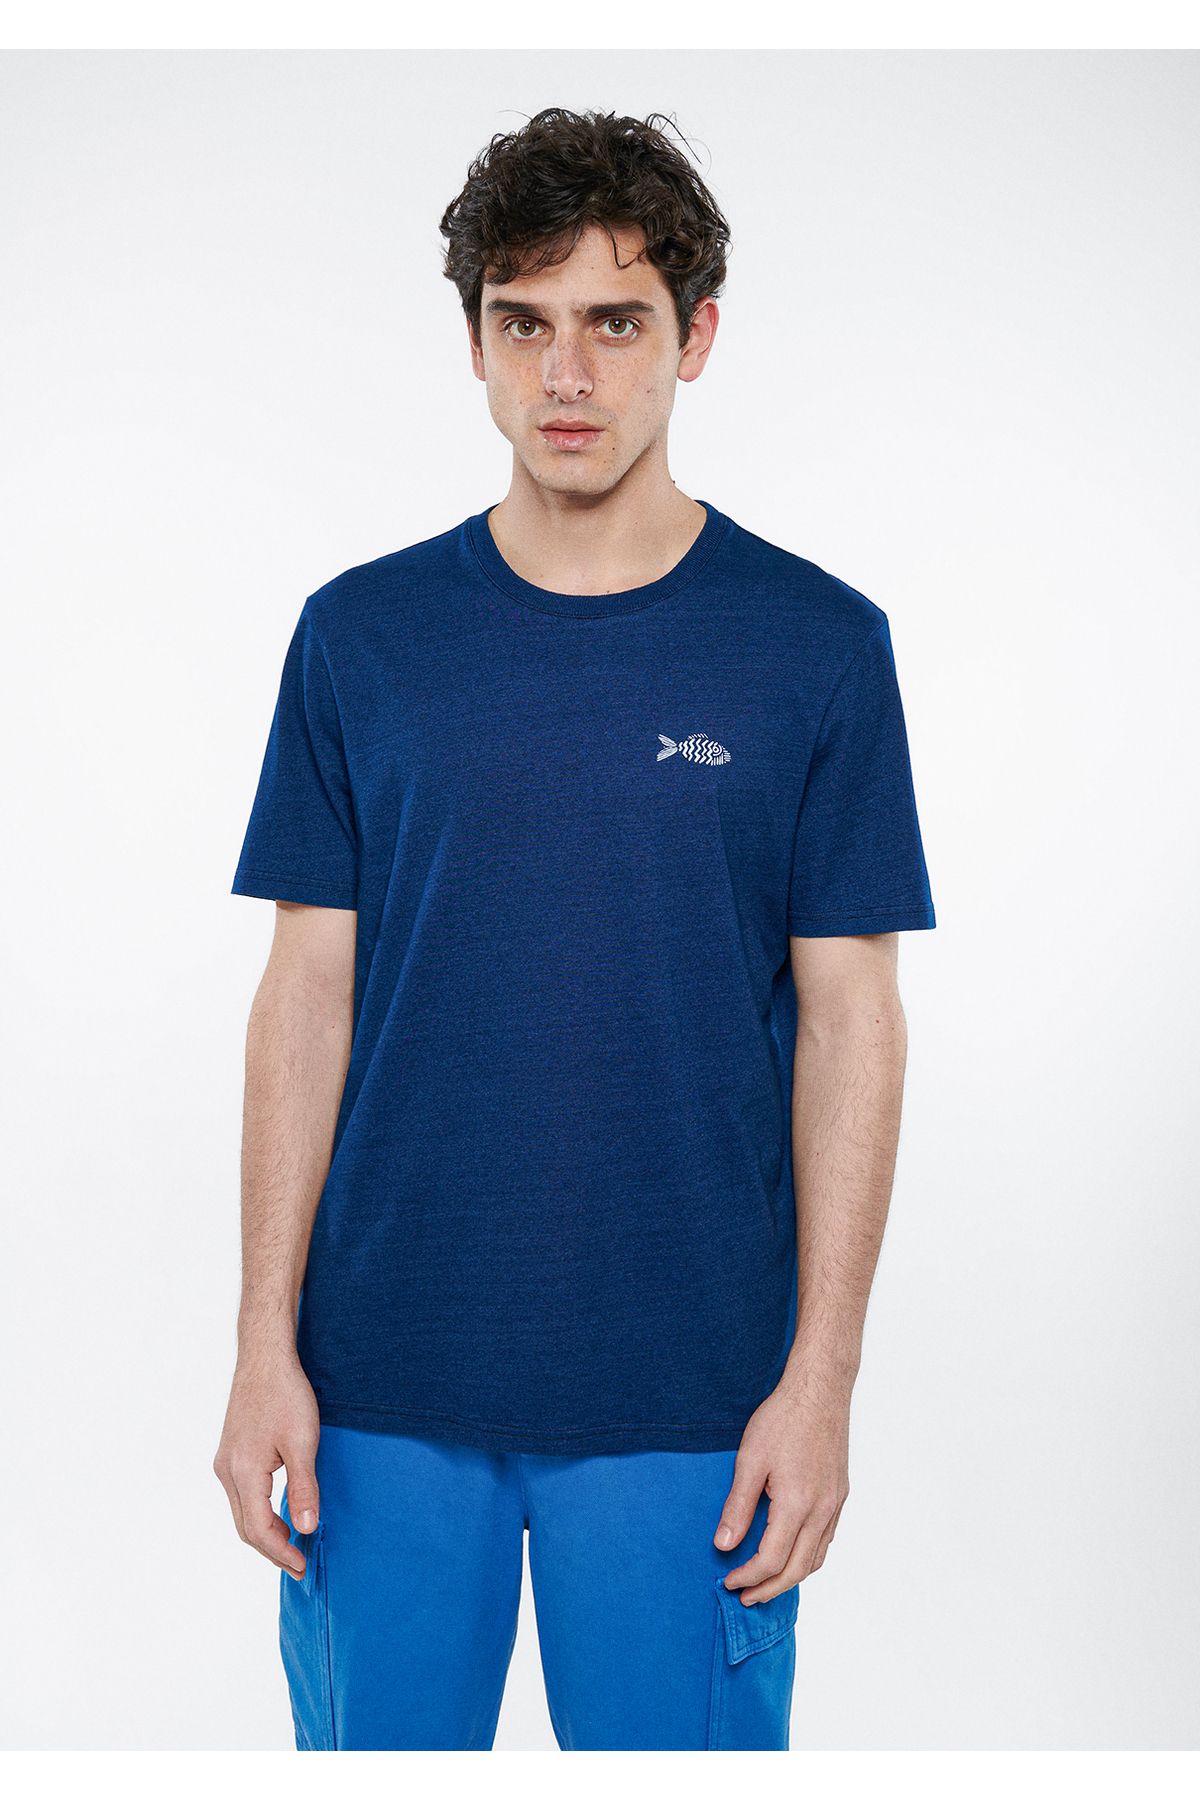 Mavi تی شرت آبی چاپ شده به صورت معمولی مناسب / برش 0611547-18790